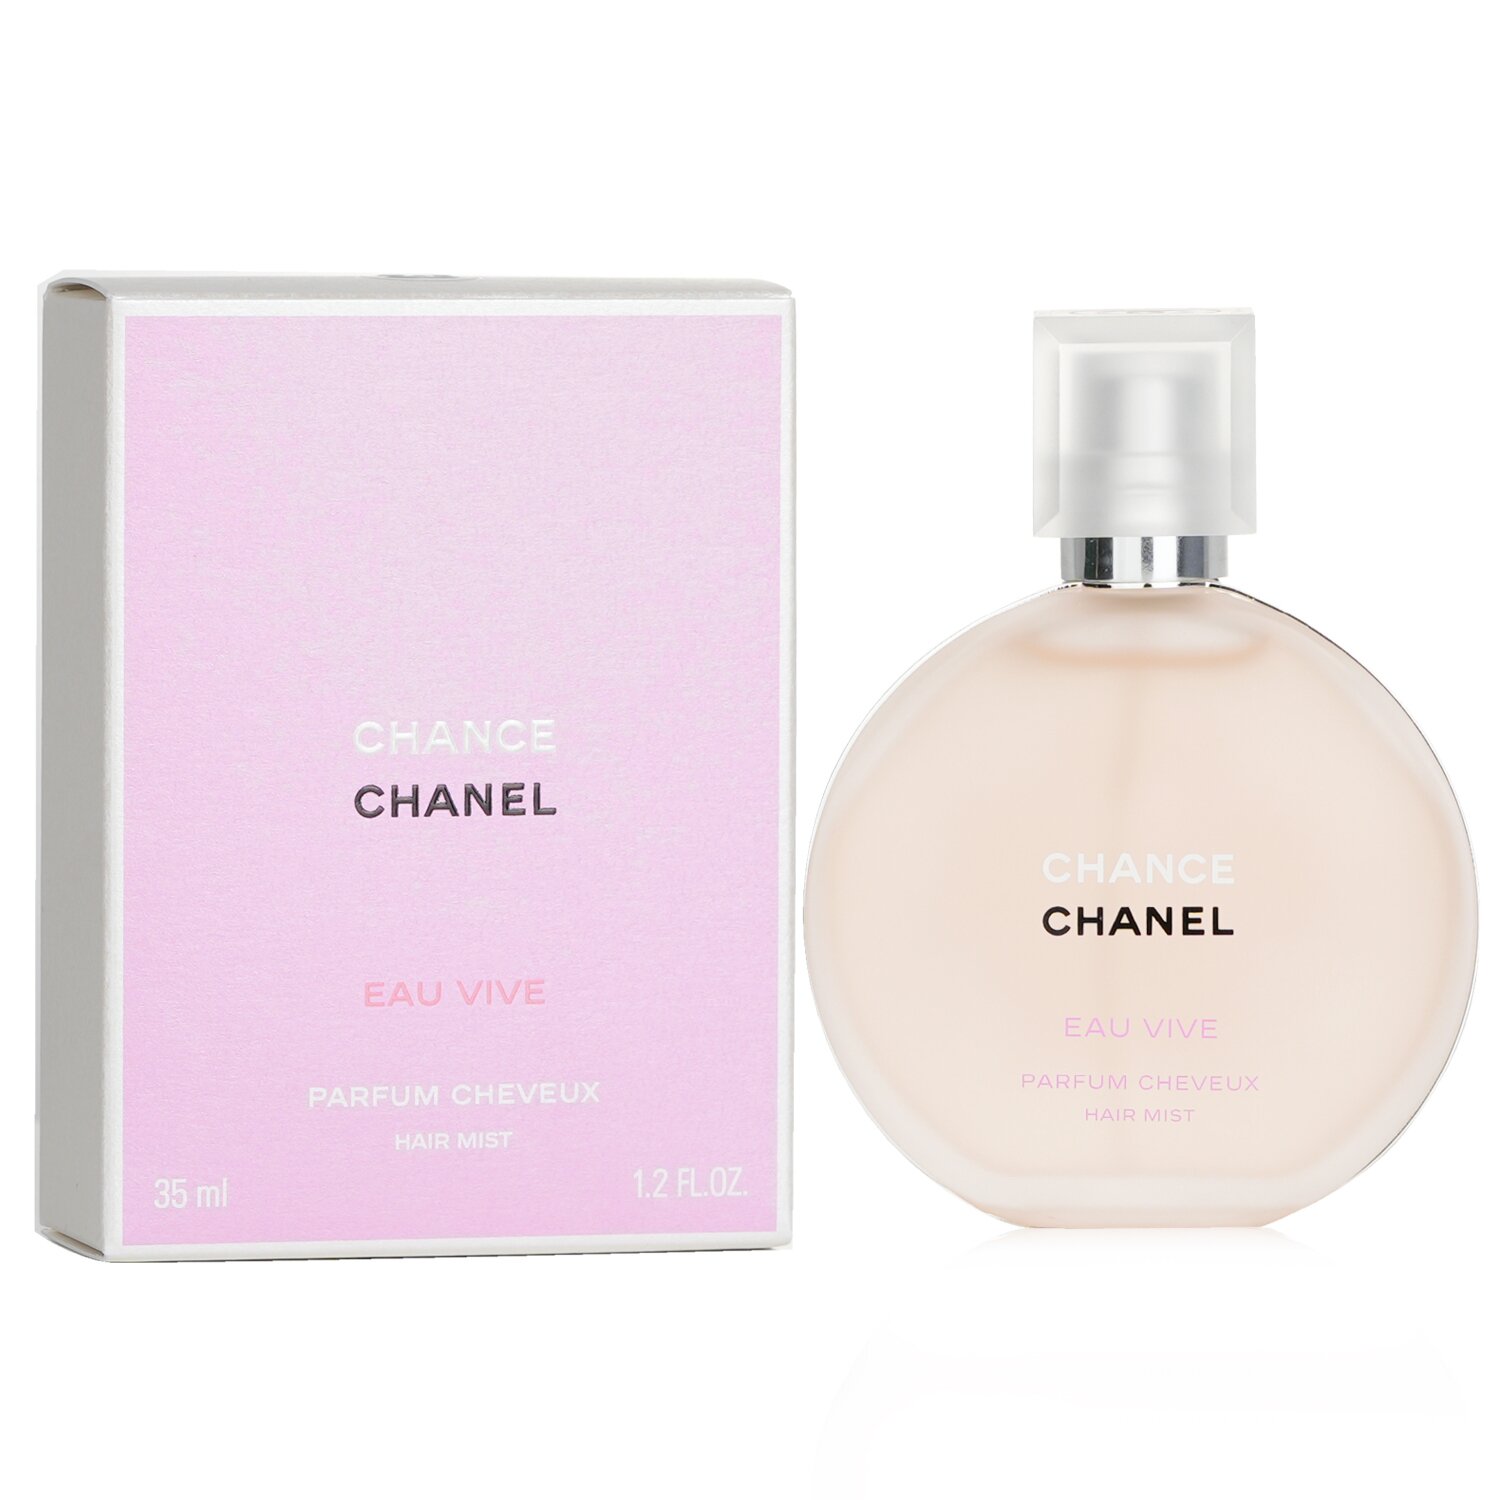 Chanel Chance Eau Vive Parfum Cheveux Hair Mist 35ml